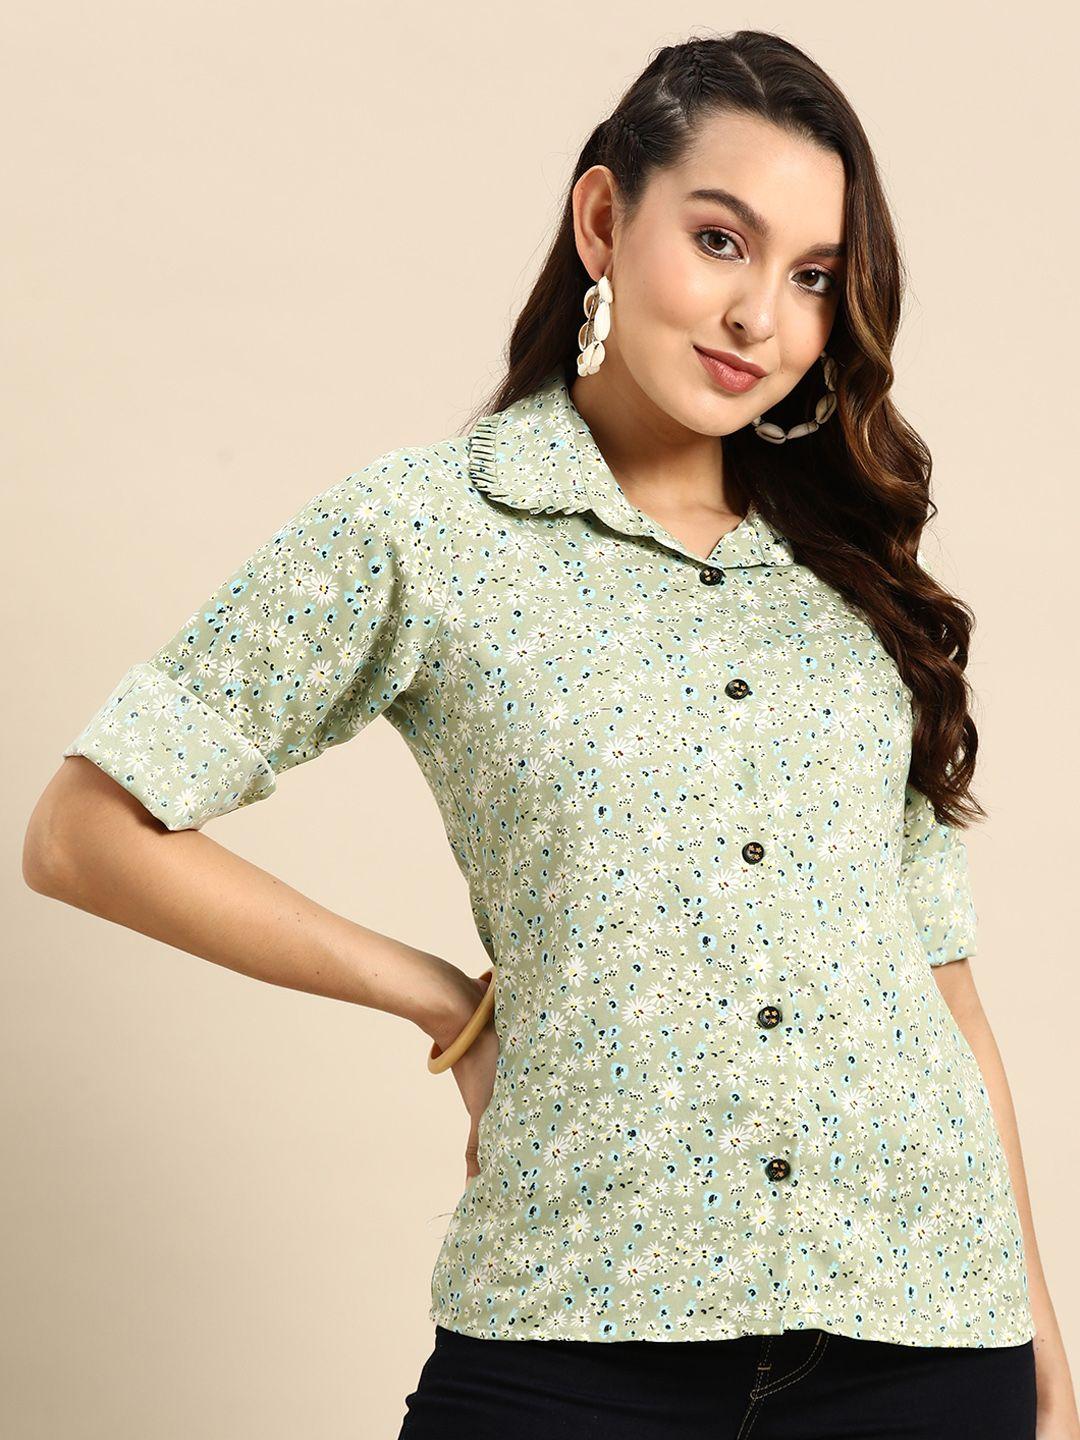 sangria floral print shirt style top